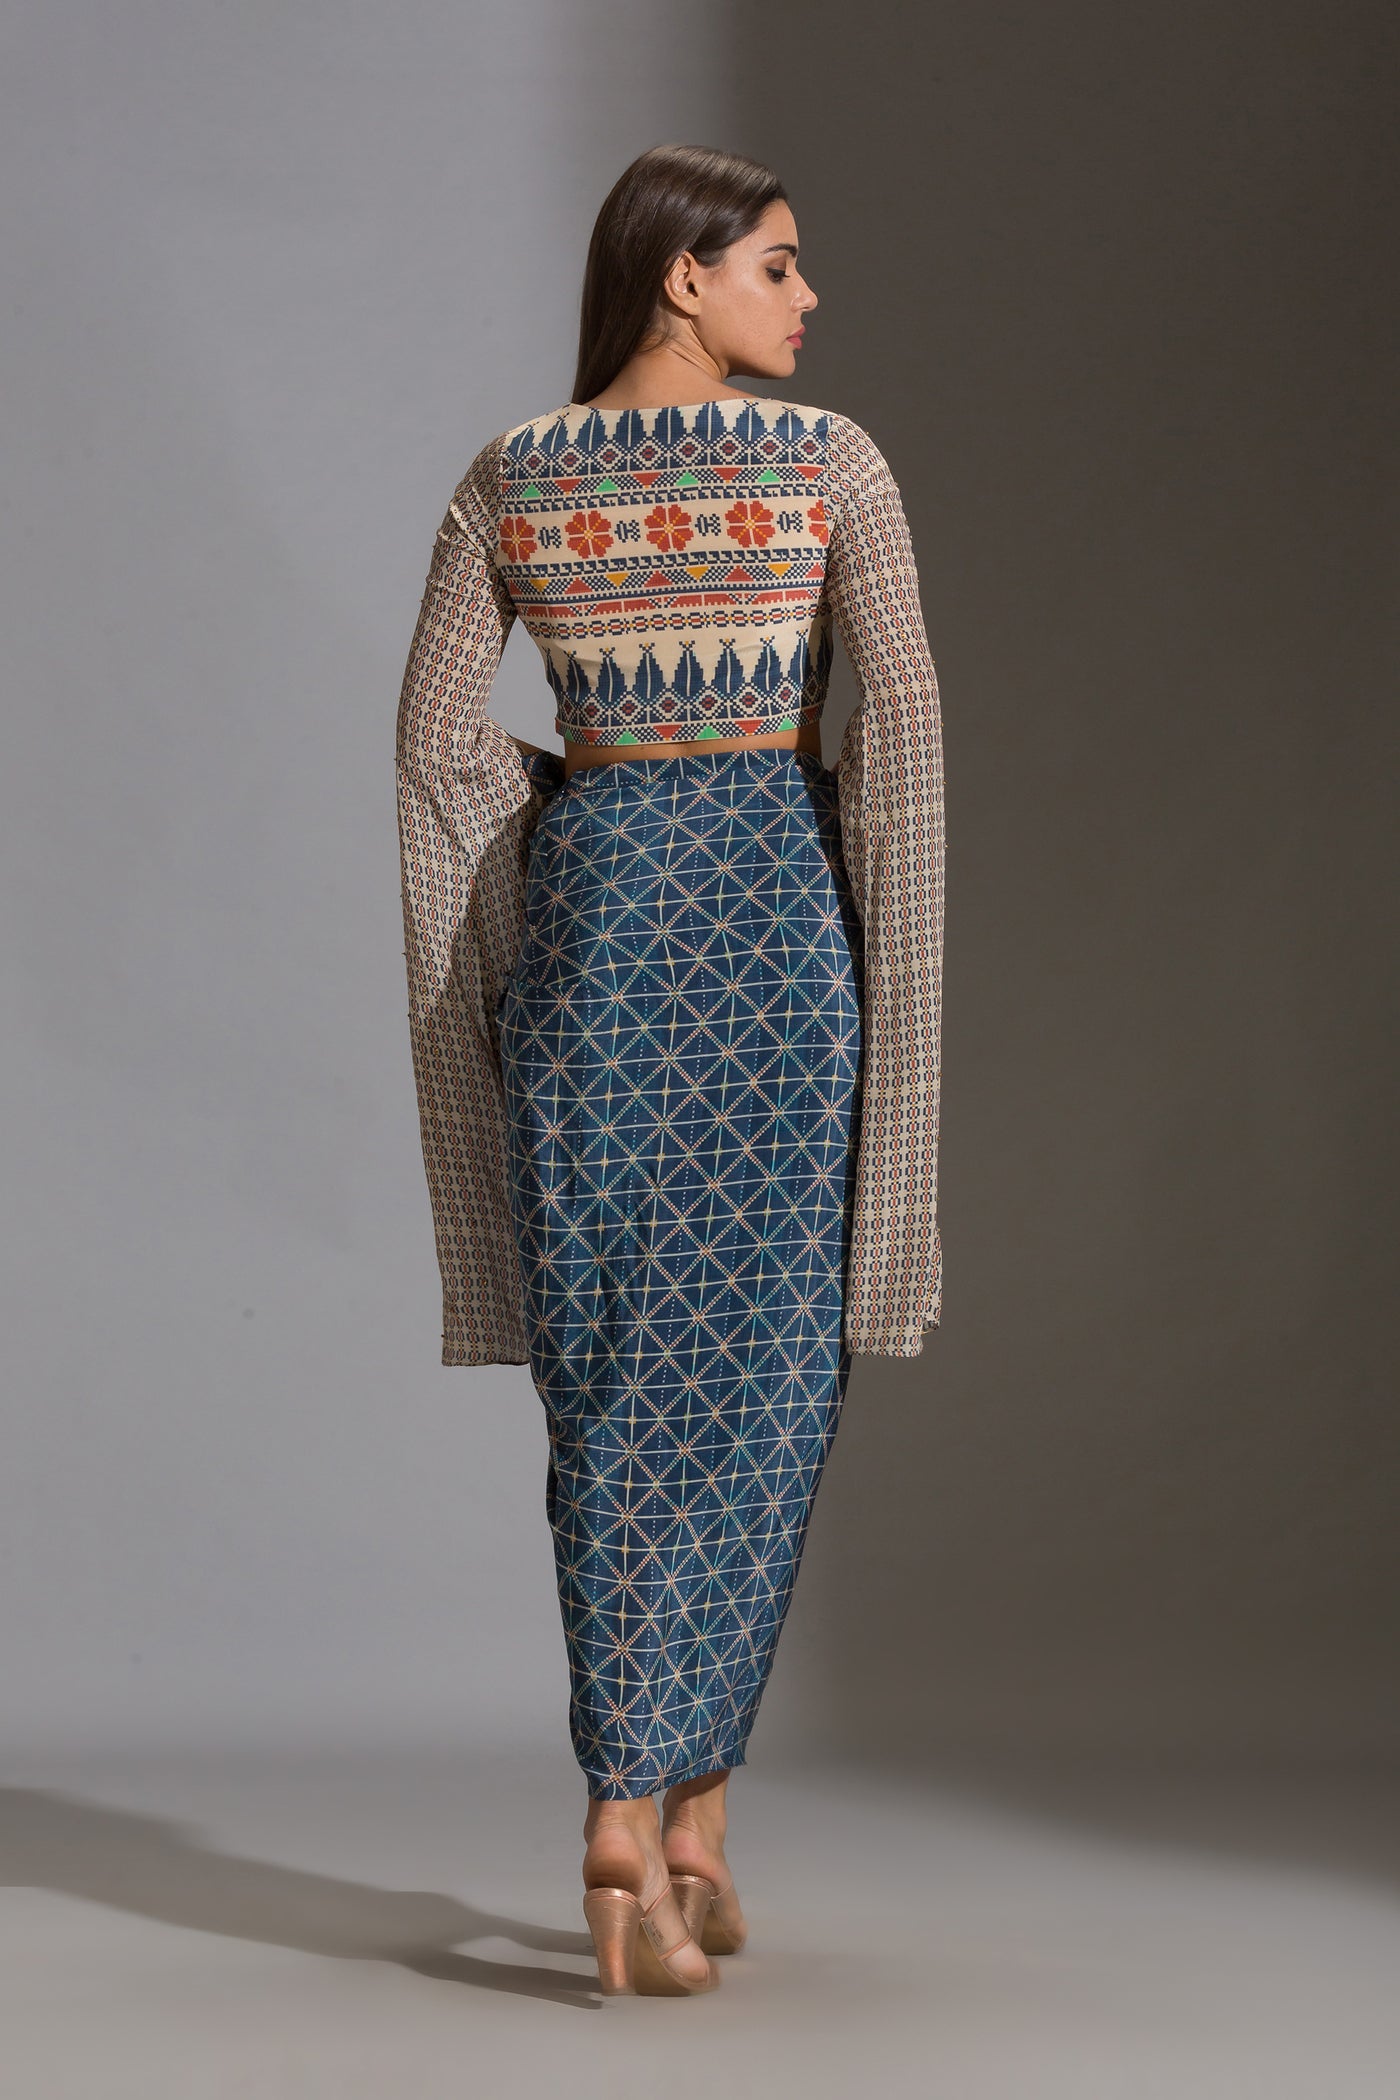 sougat paul Printed Crop Top And Dhoti Skirt Set blue multicolor festive fusion indian designer wear online shopping melange singapore